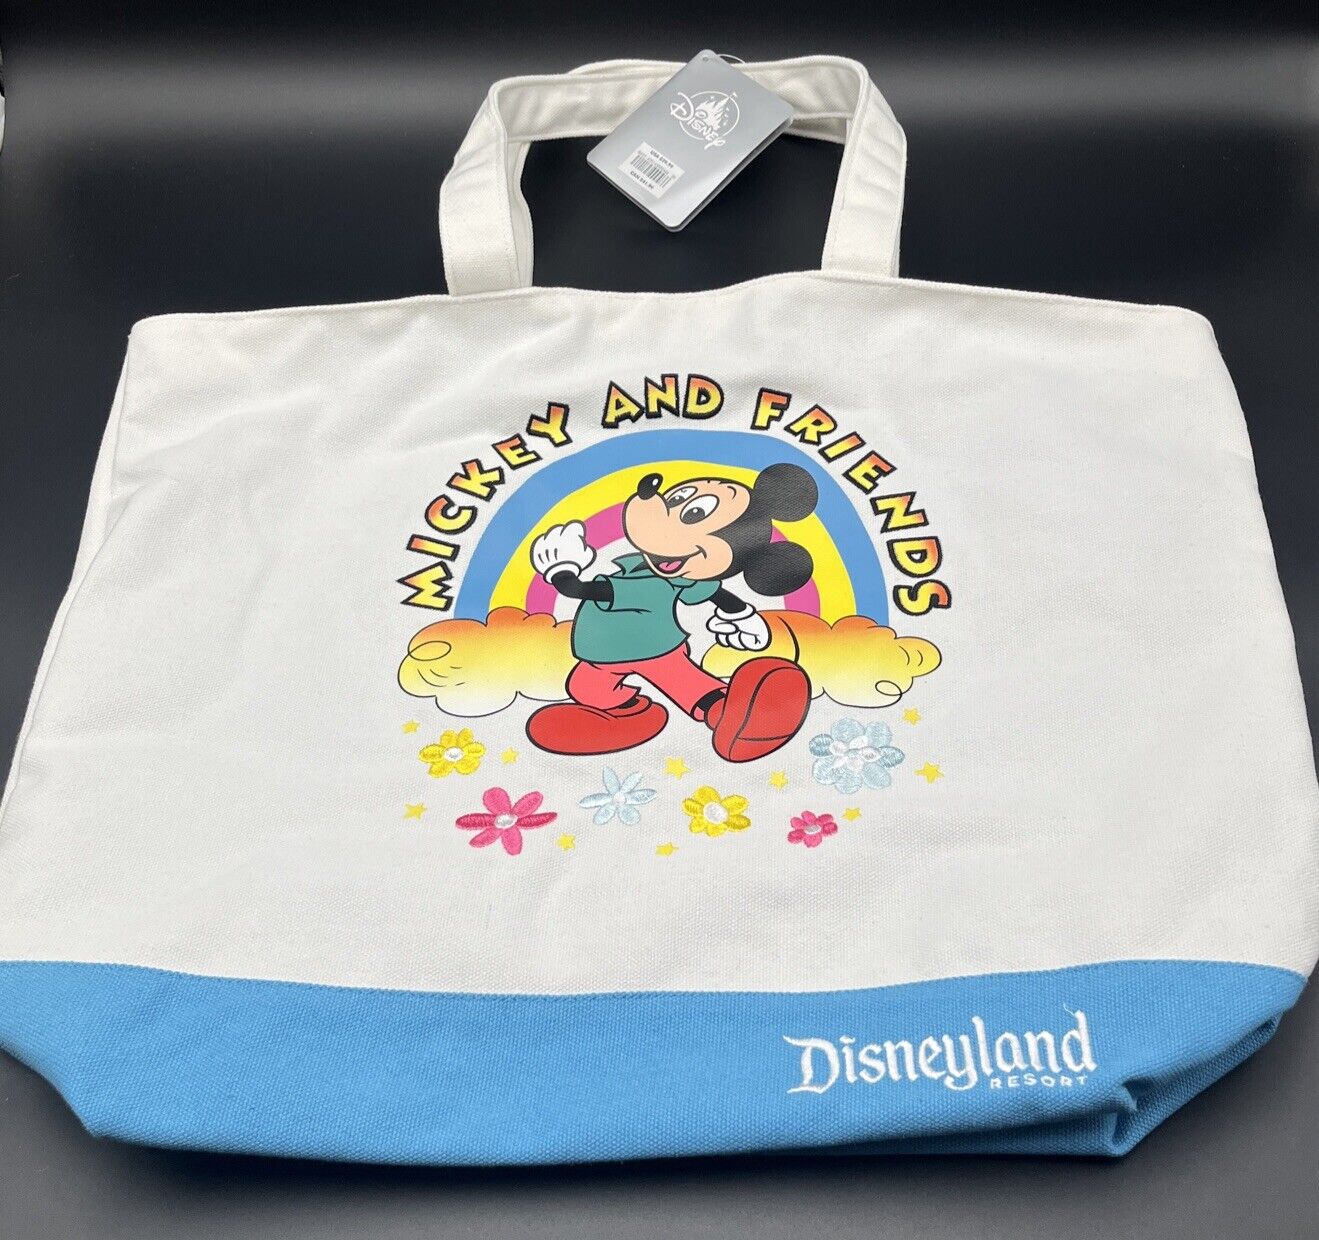 Disneyland Resort Mickey and Friends tote bag